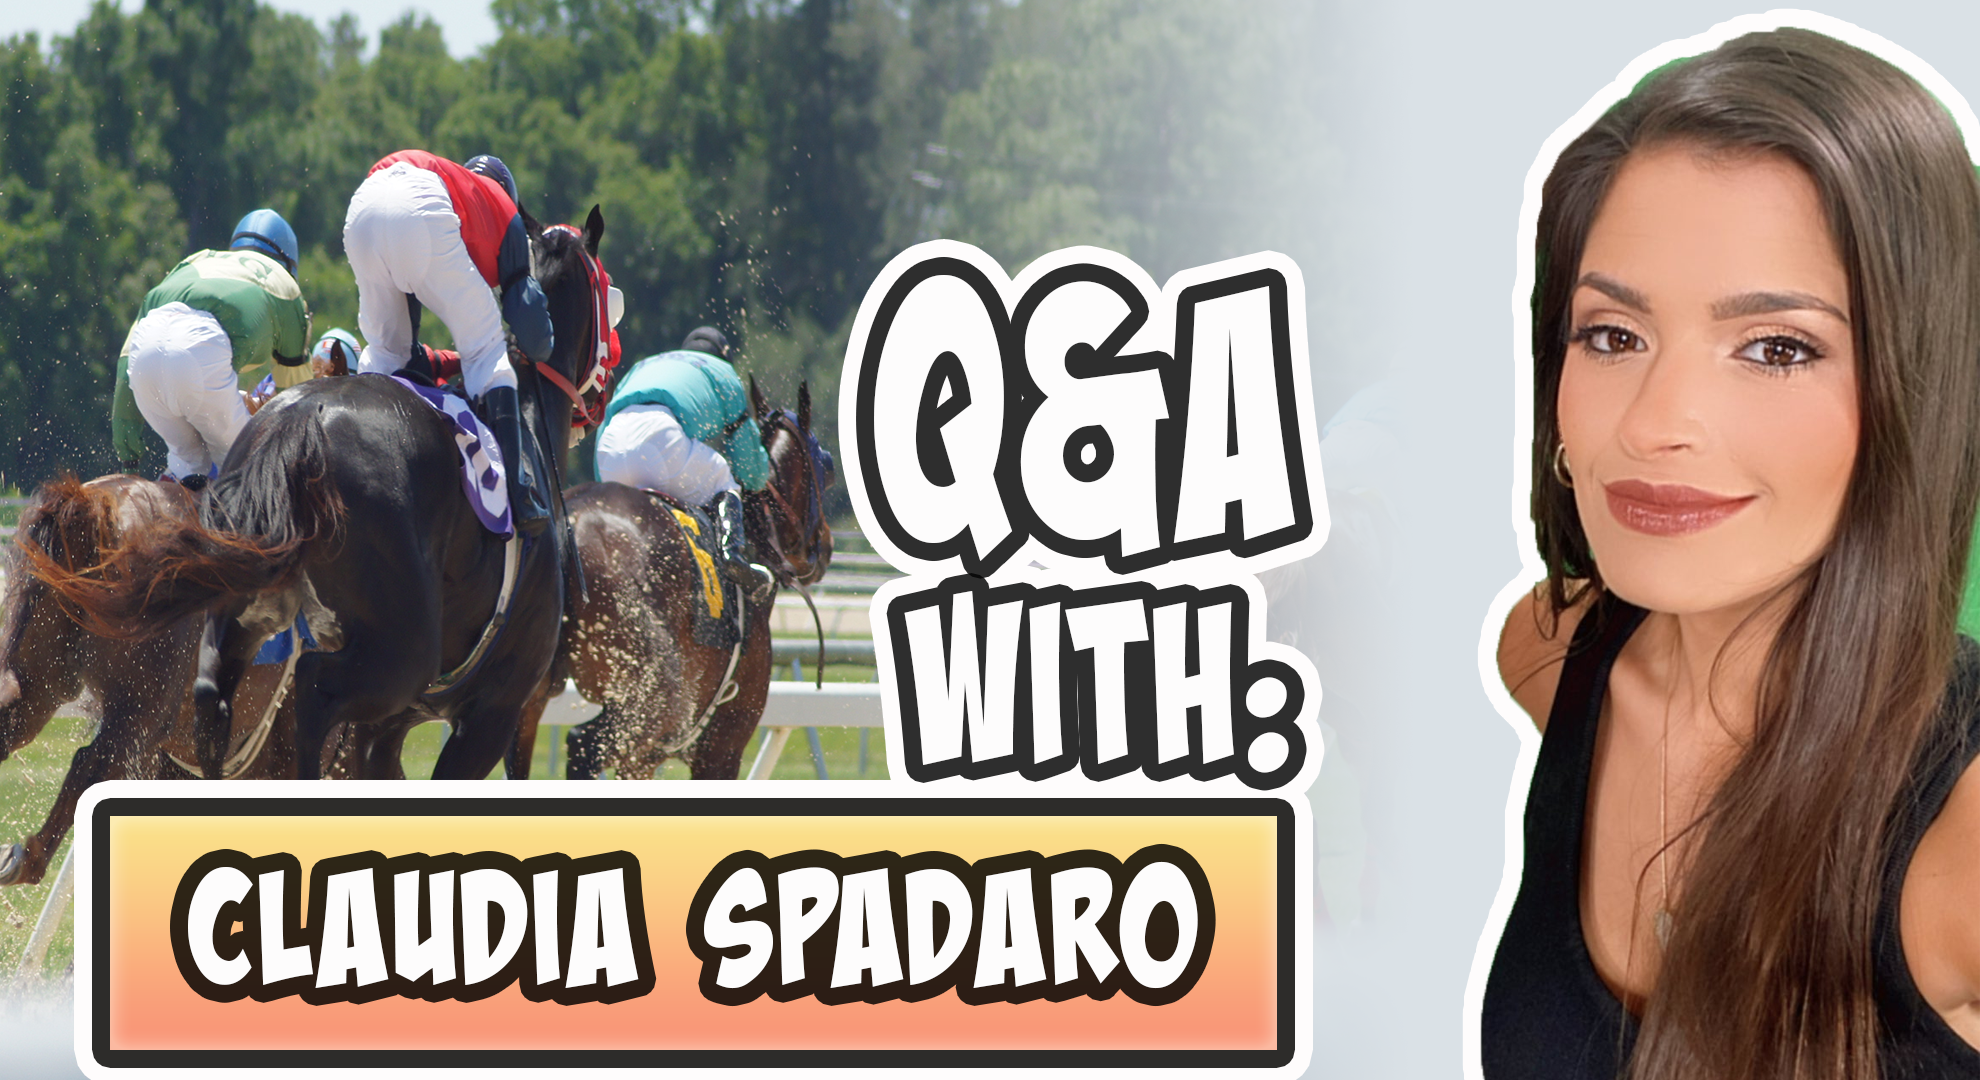 Q&A with Claudia Spadaro